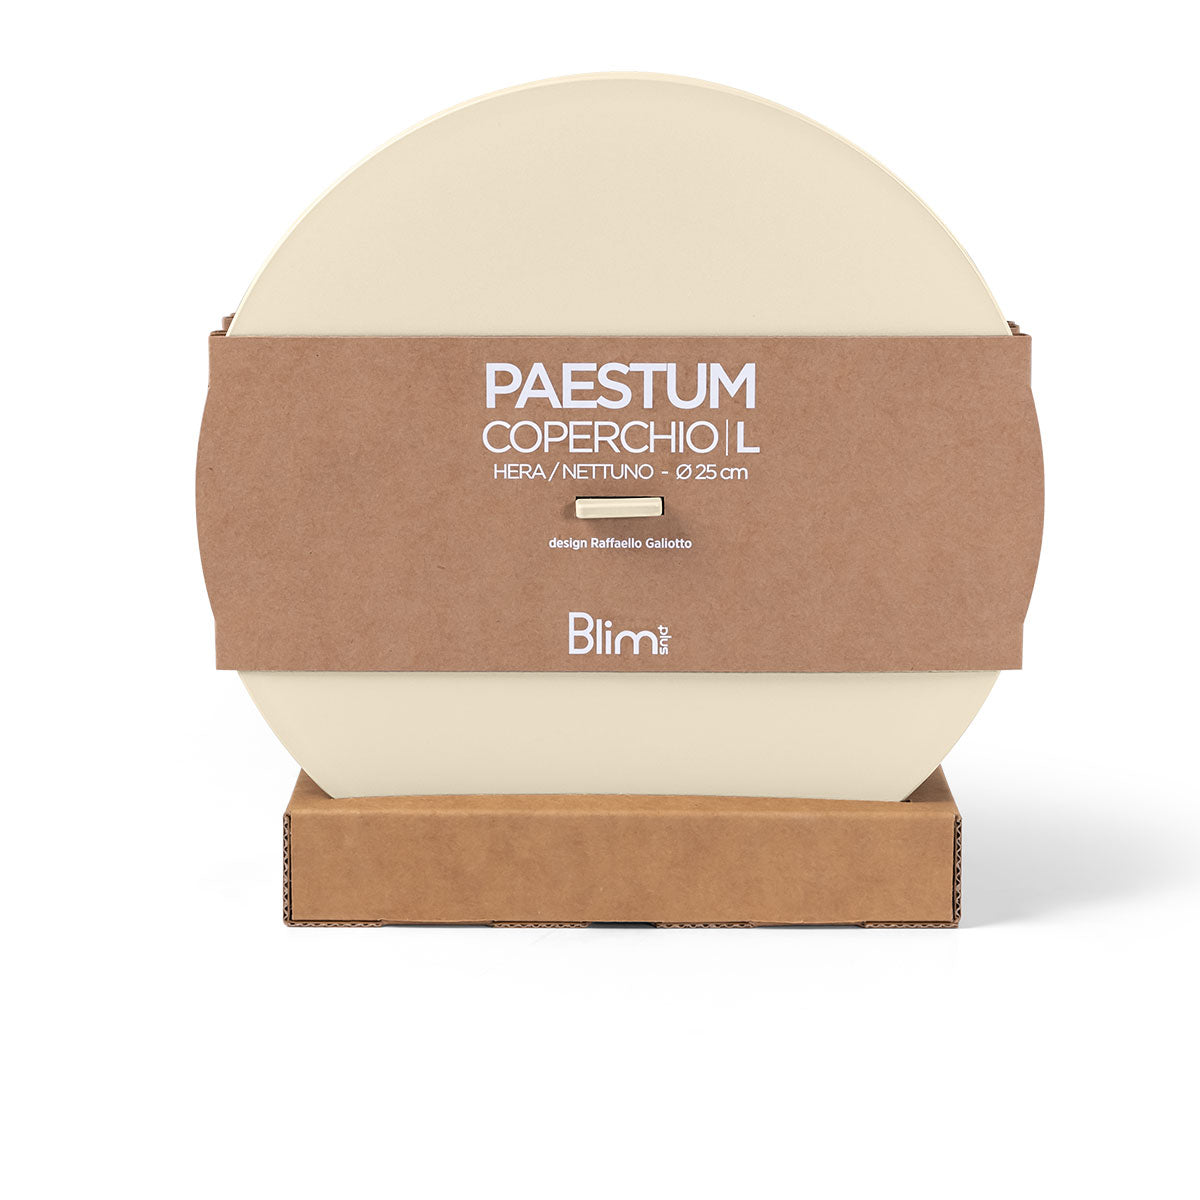 BLIM PLUS Coperchio per Ciotola Paestum L 25cm Brown Sugar Sabbia Made in Italy 100% Riciclabile